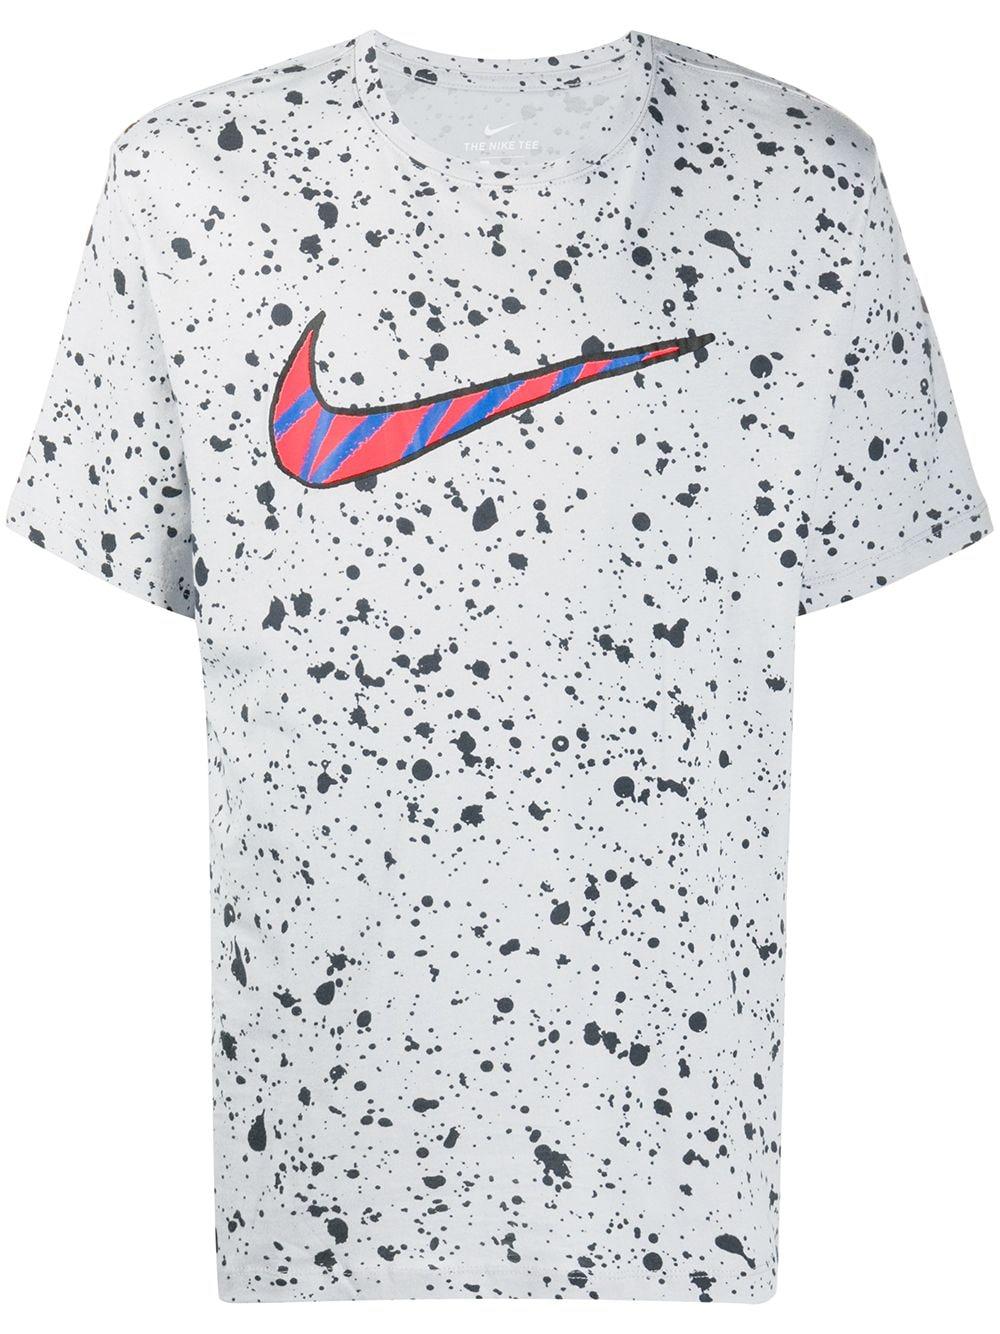 Nike Cotton Nsw Splatter Swoosh T-shirt in Grey (Gray) for Men - Lyst